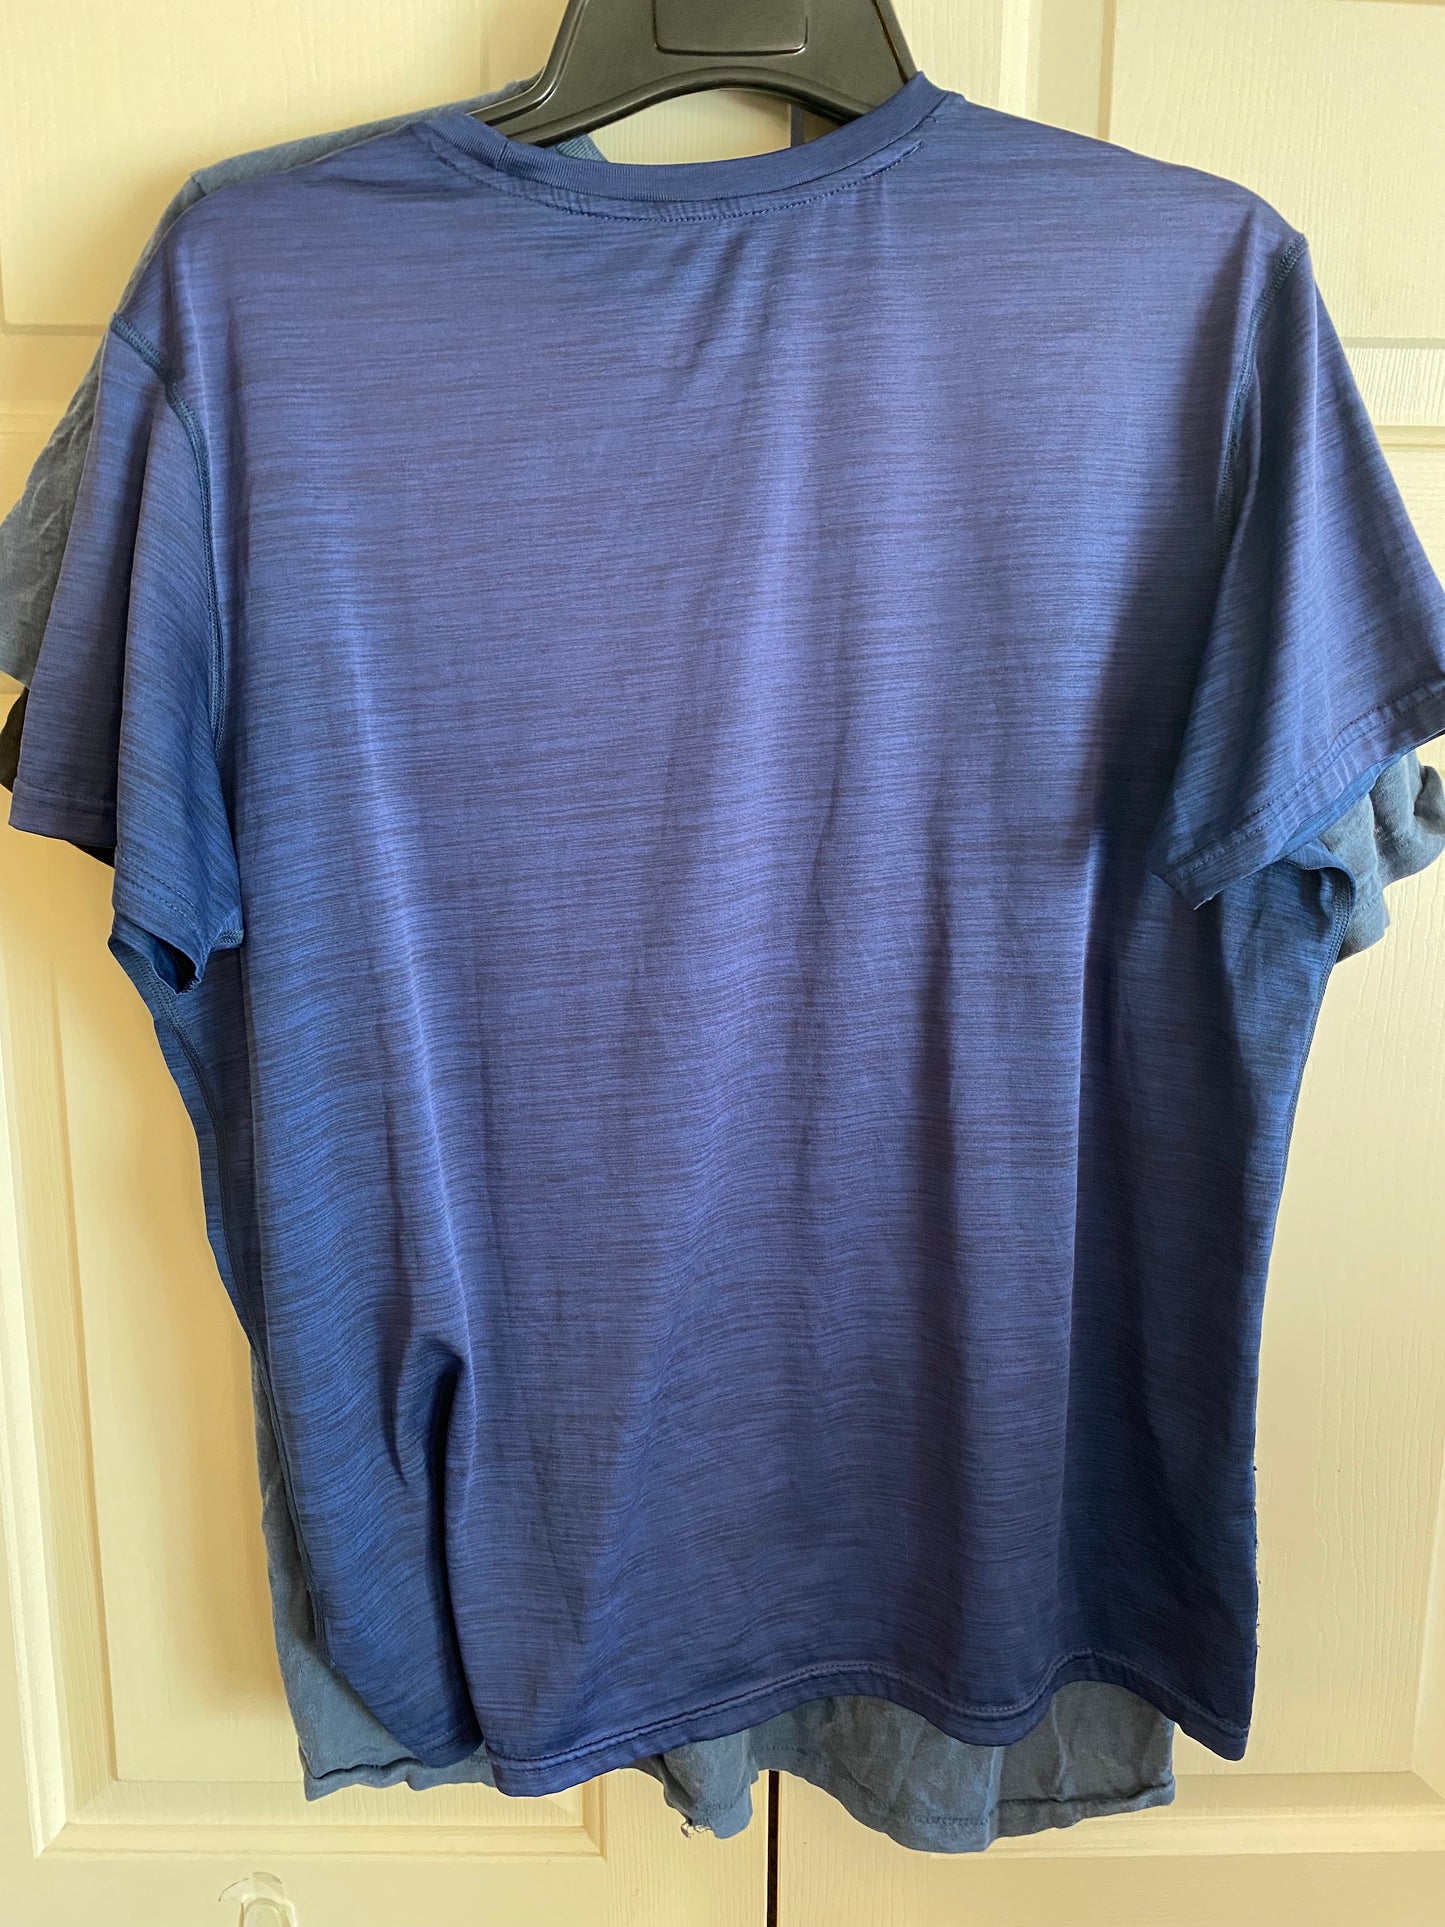 Tek Gear Performance Wicking T-Shirt DryTek Top Blue Size Large